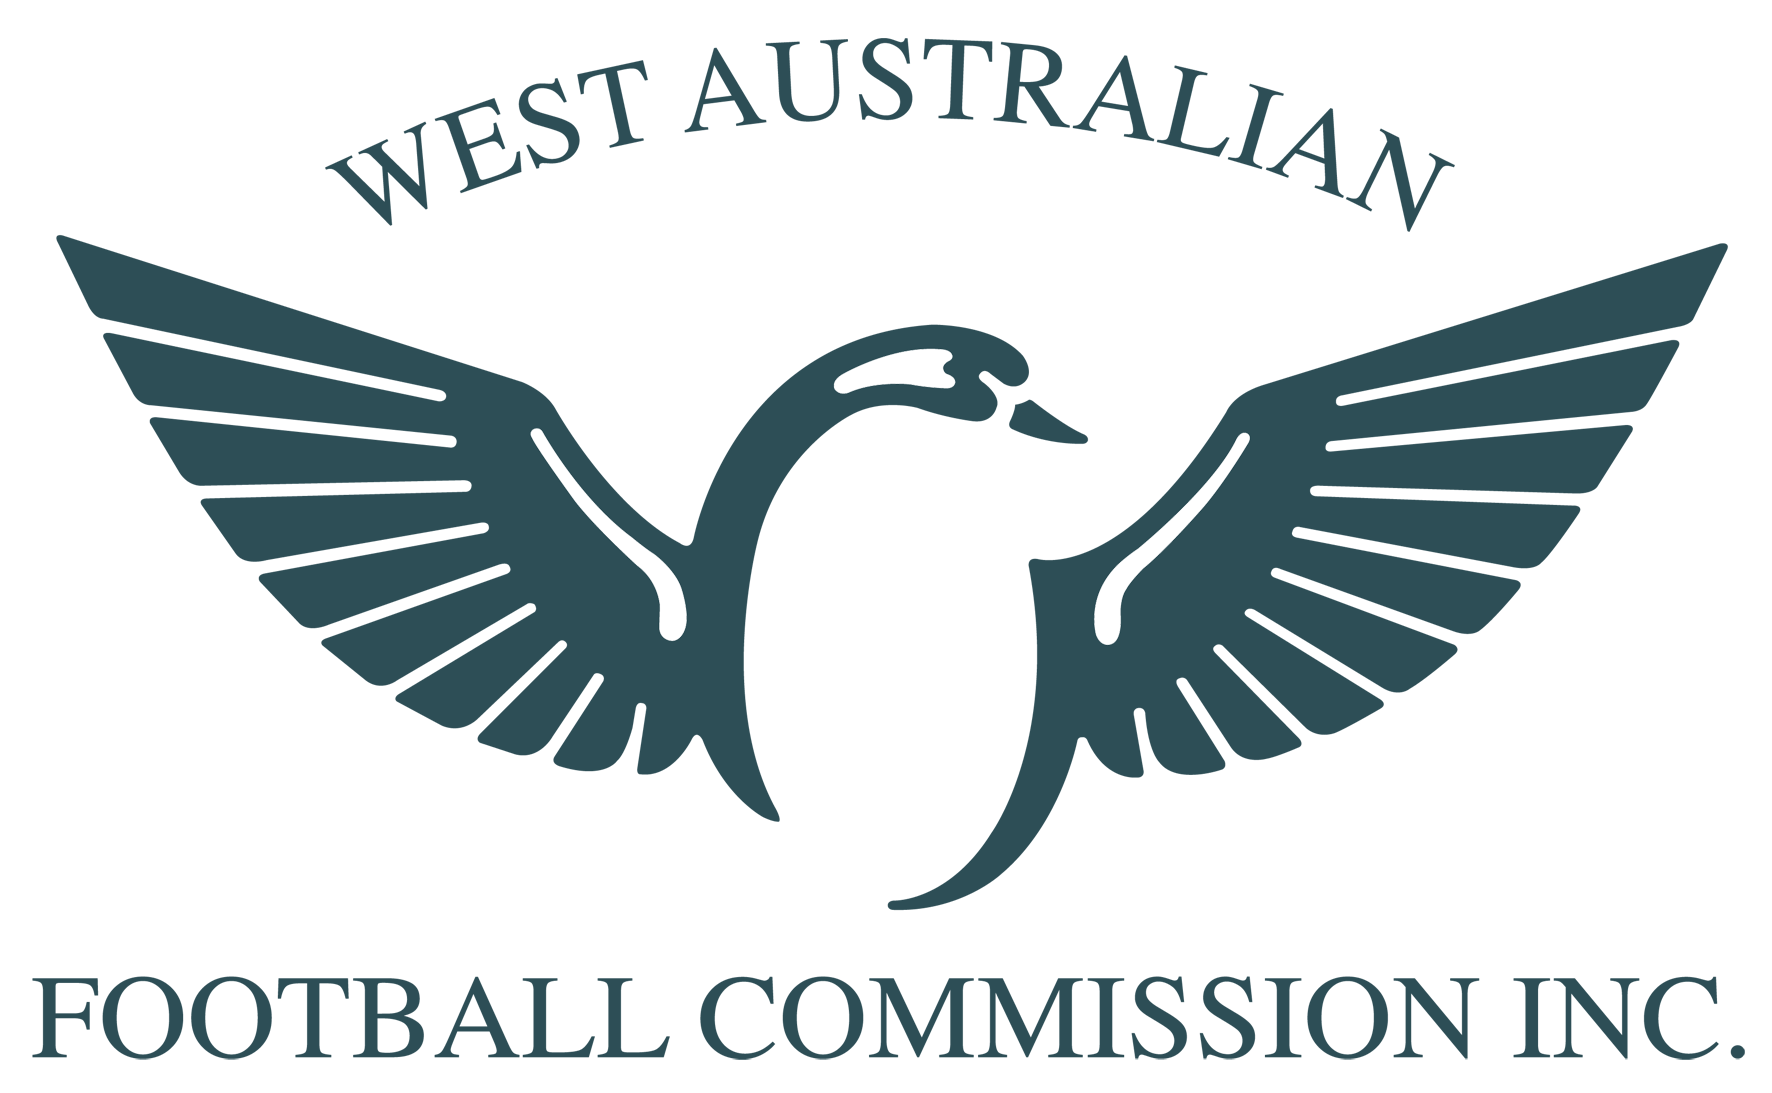 WA Football Commission